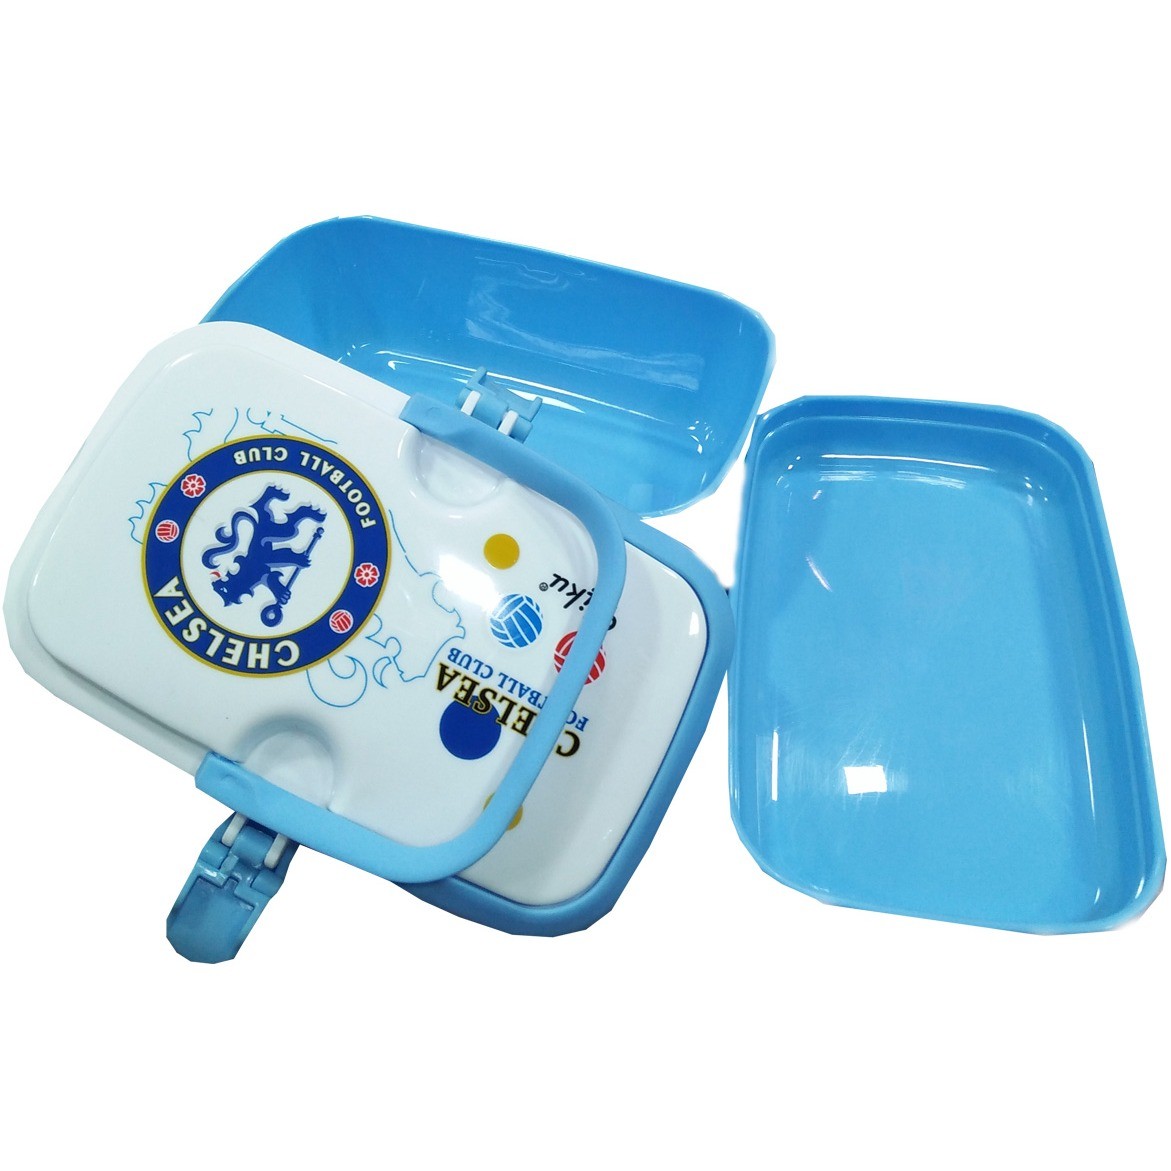 Kiku Chelsea Football Club Lunch Box for Kids - White & Blue